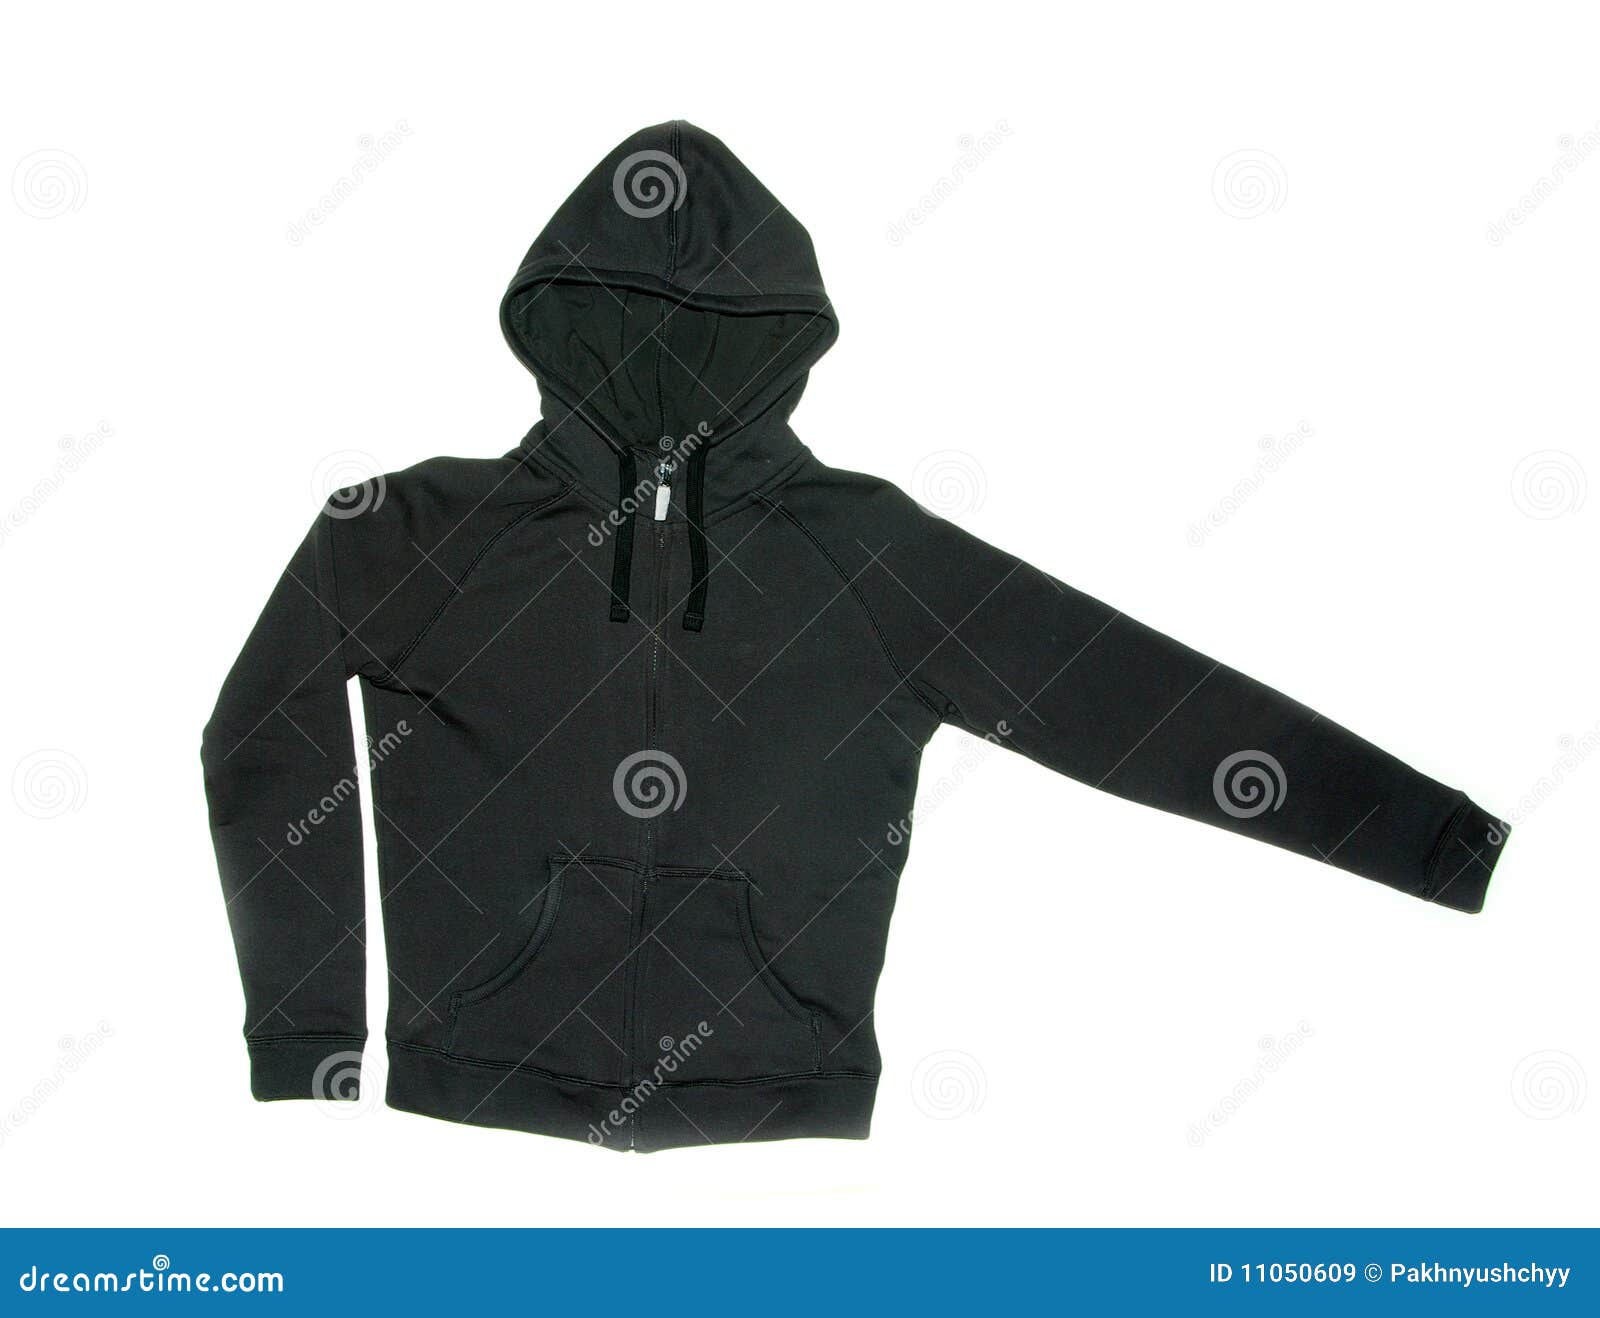 Sport jacket stock image. Image of apparel, shopping - 11050609